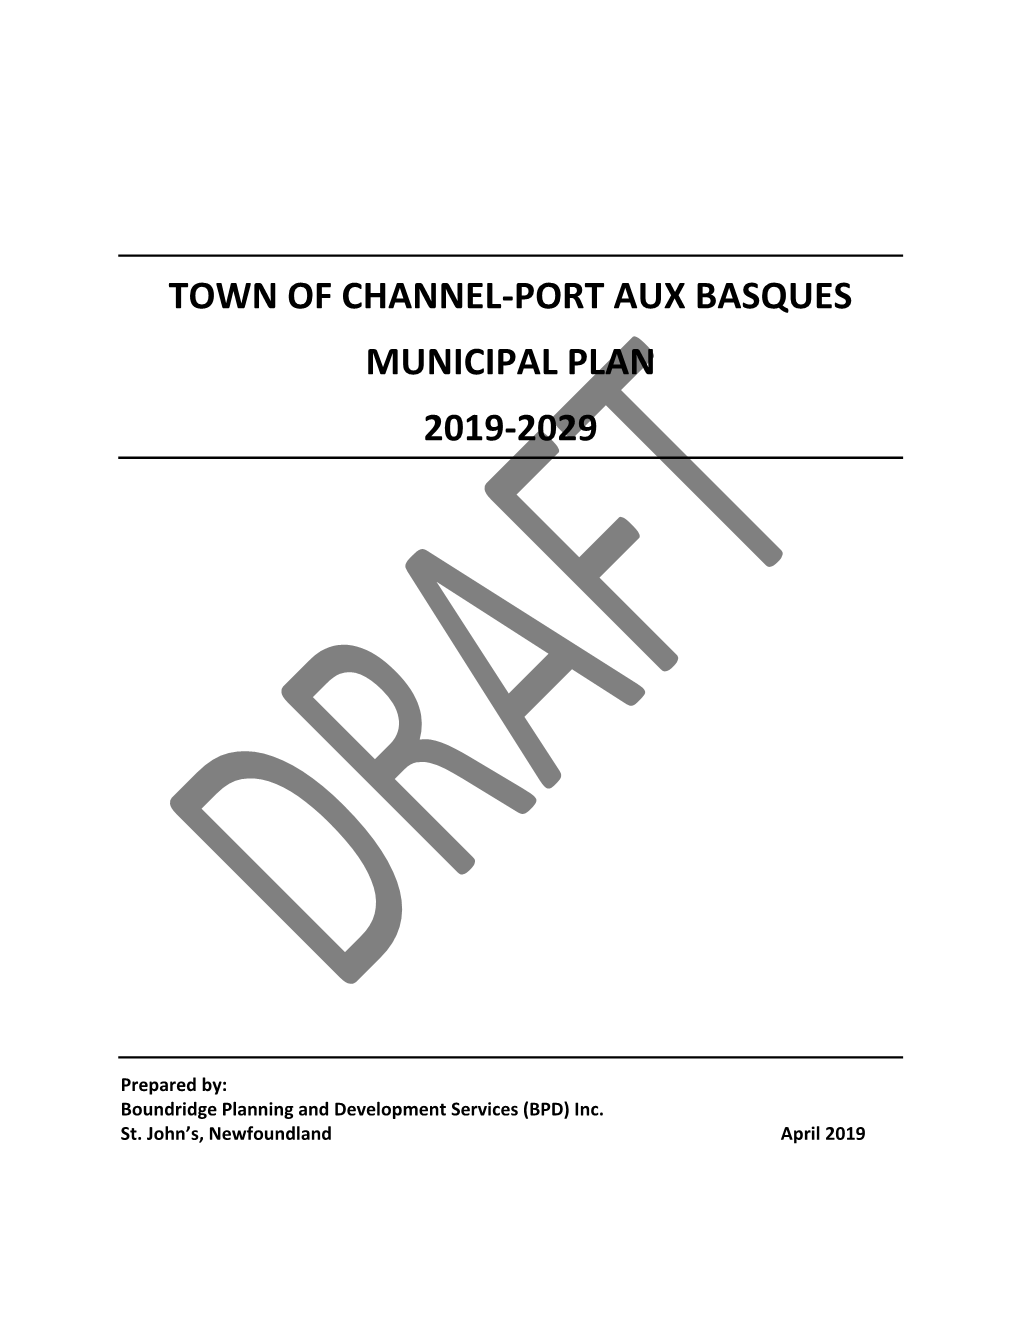 Draft Municipal Plan 2019-2029